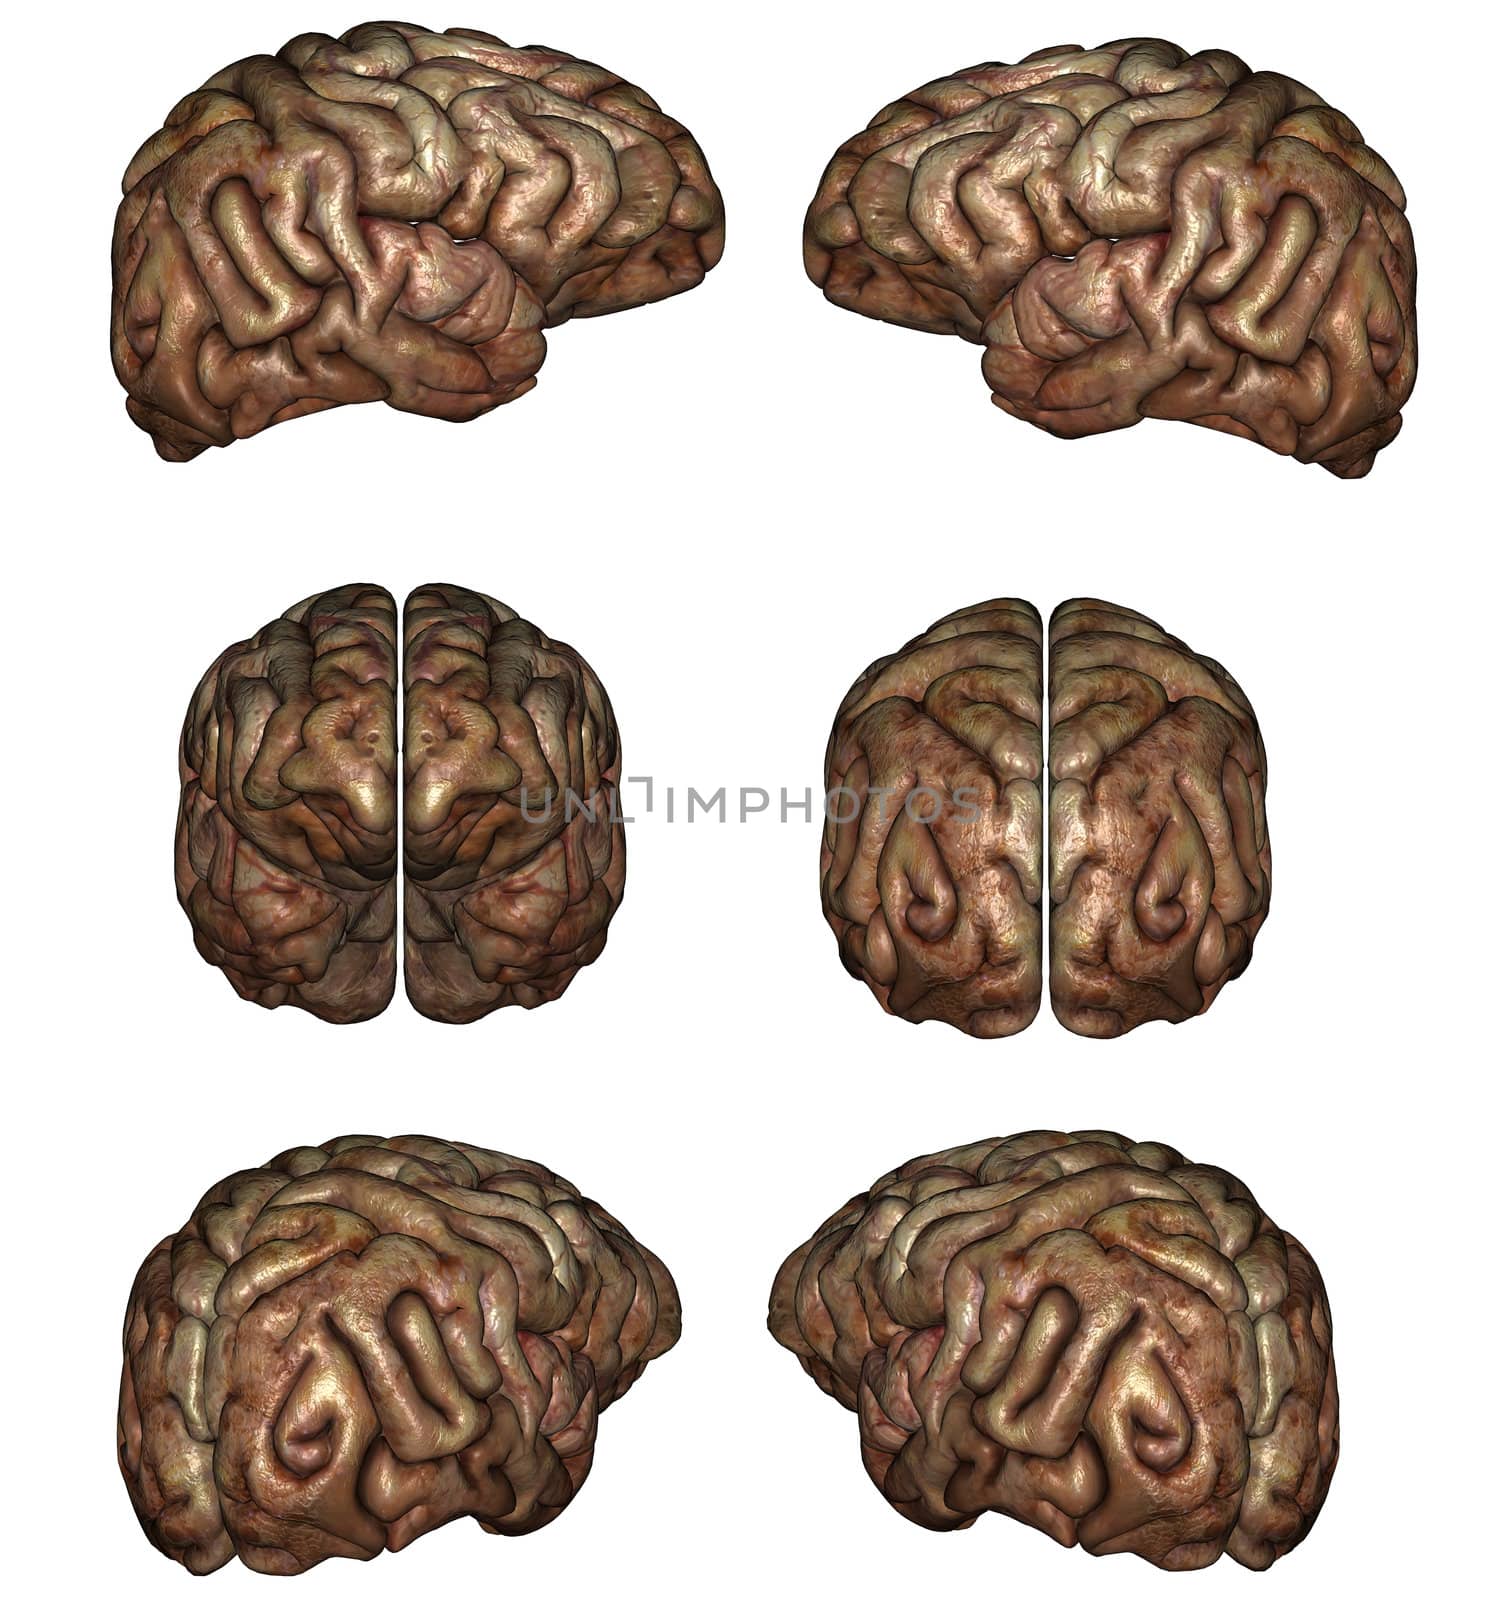 Human brain by Wampa